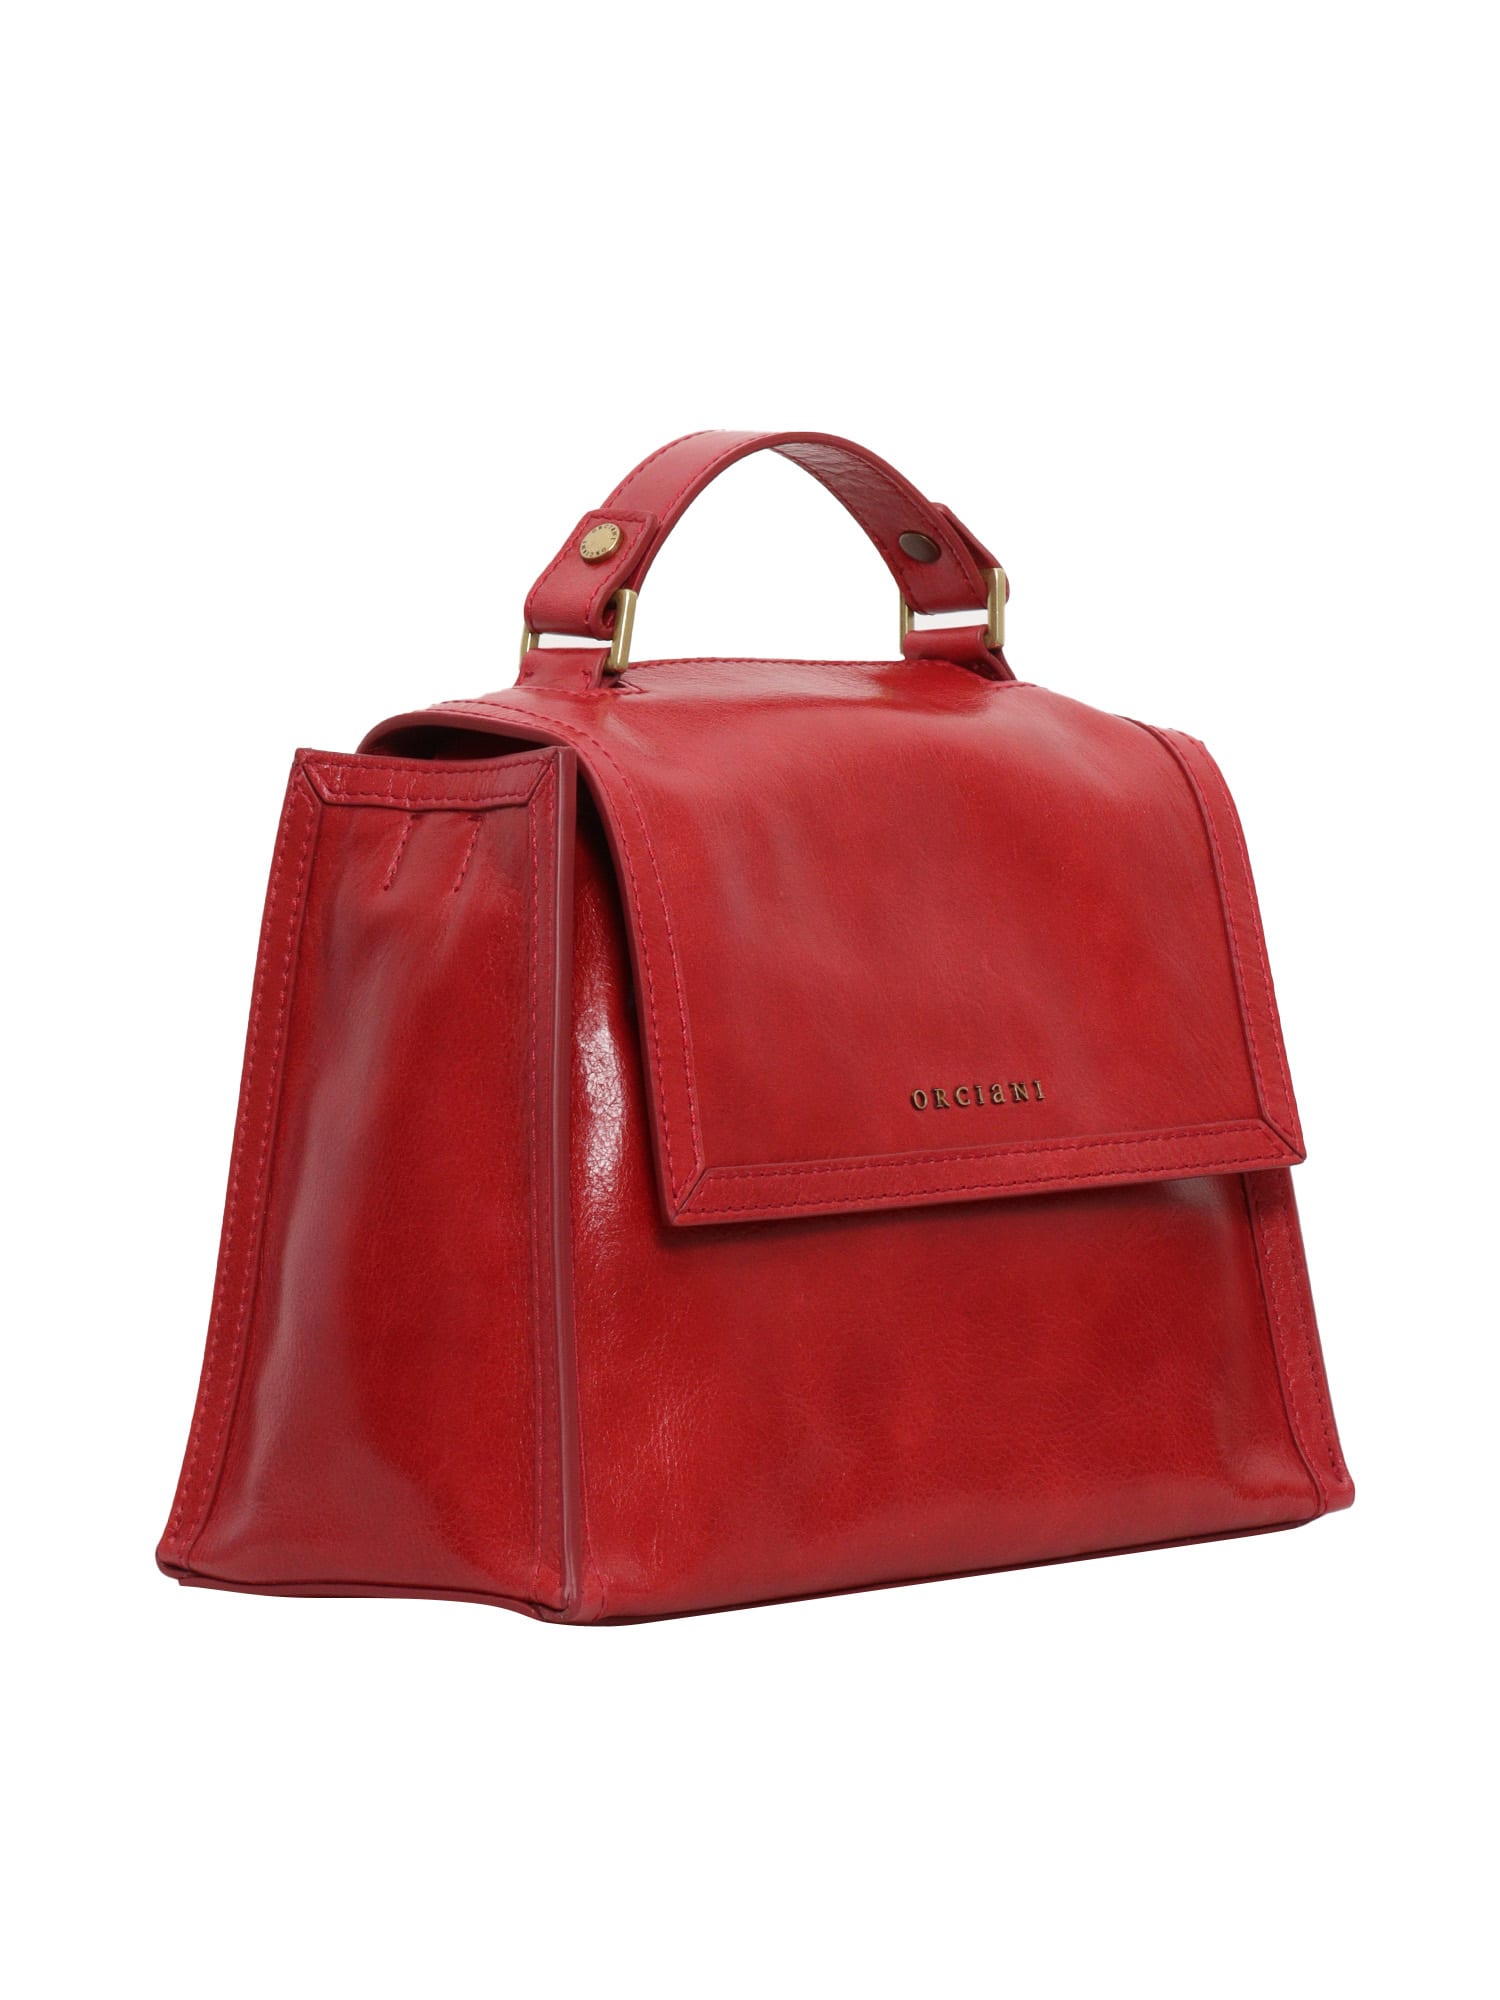 Shop Orciani Red Leather Handbag